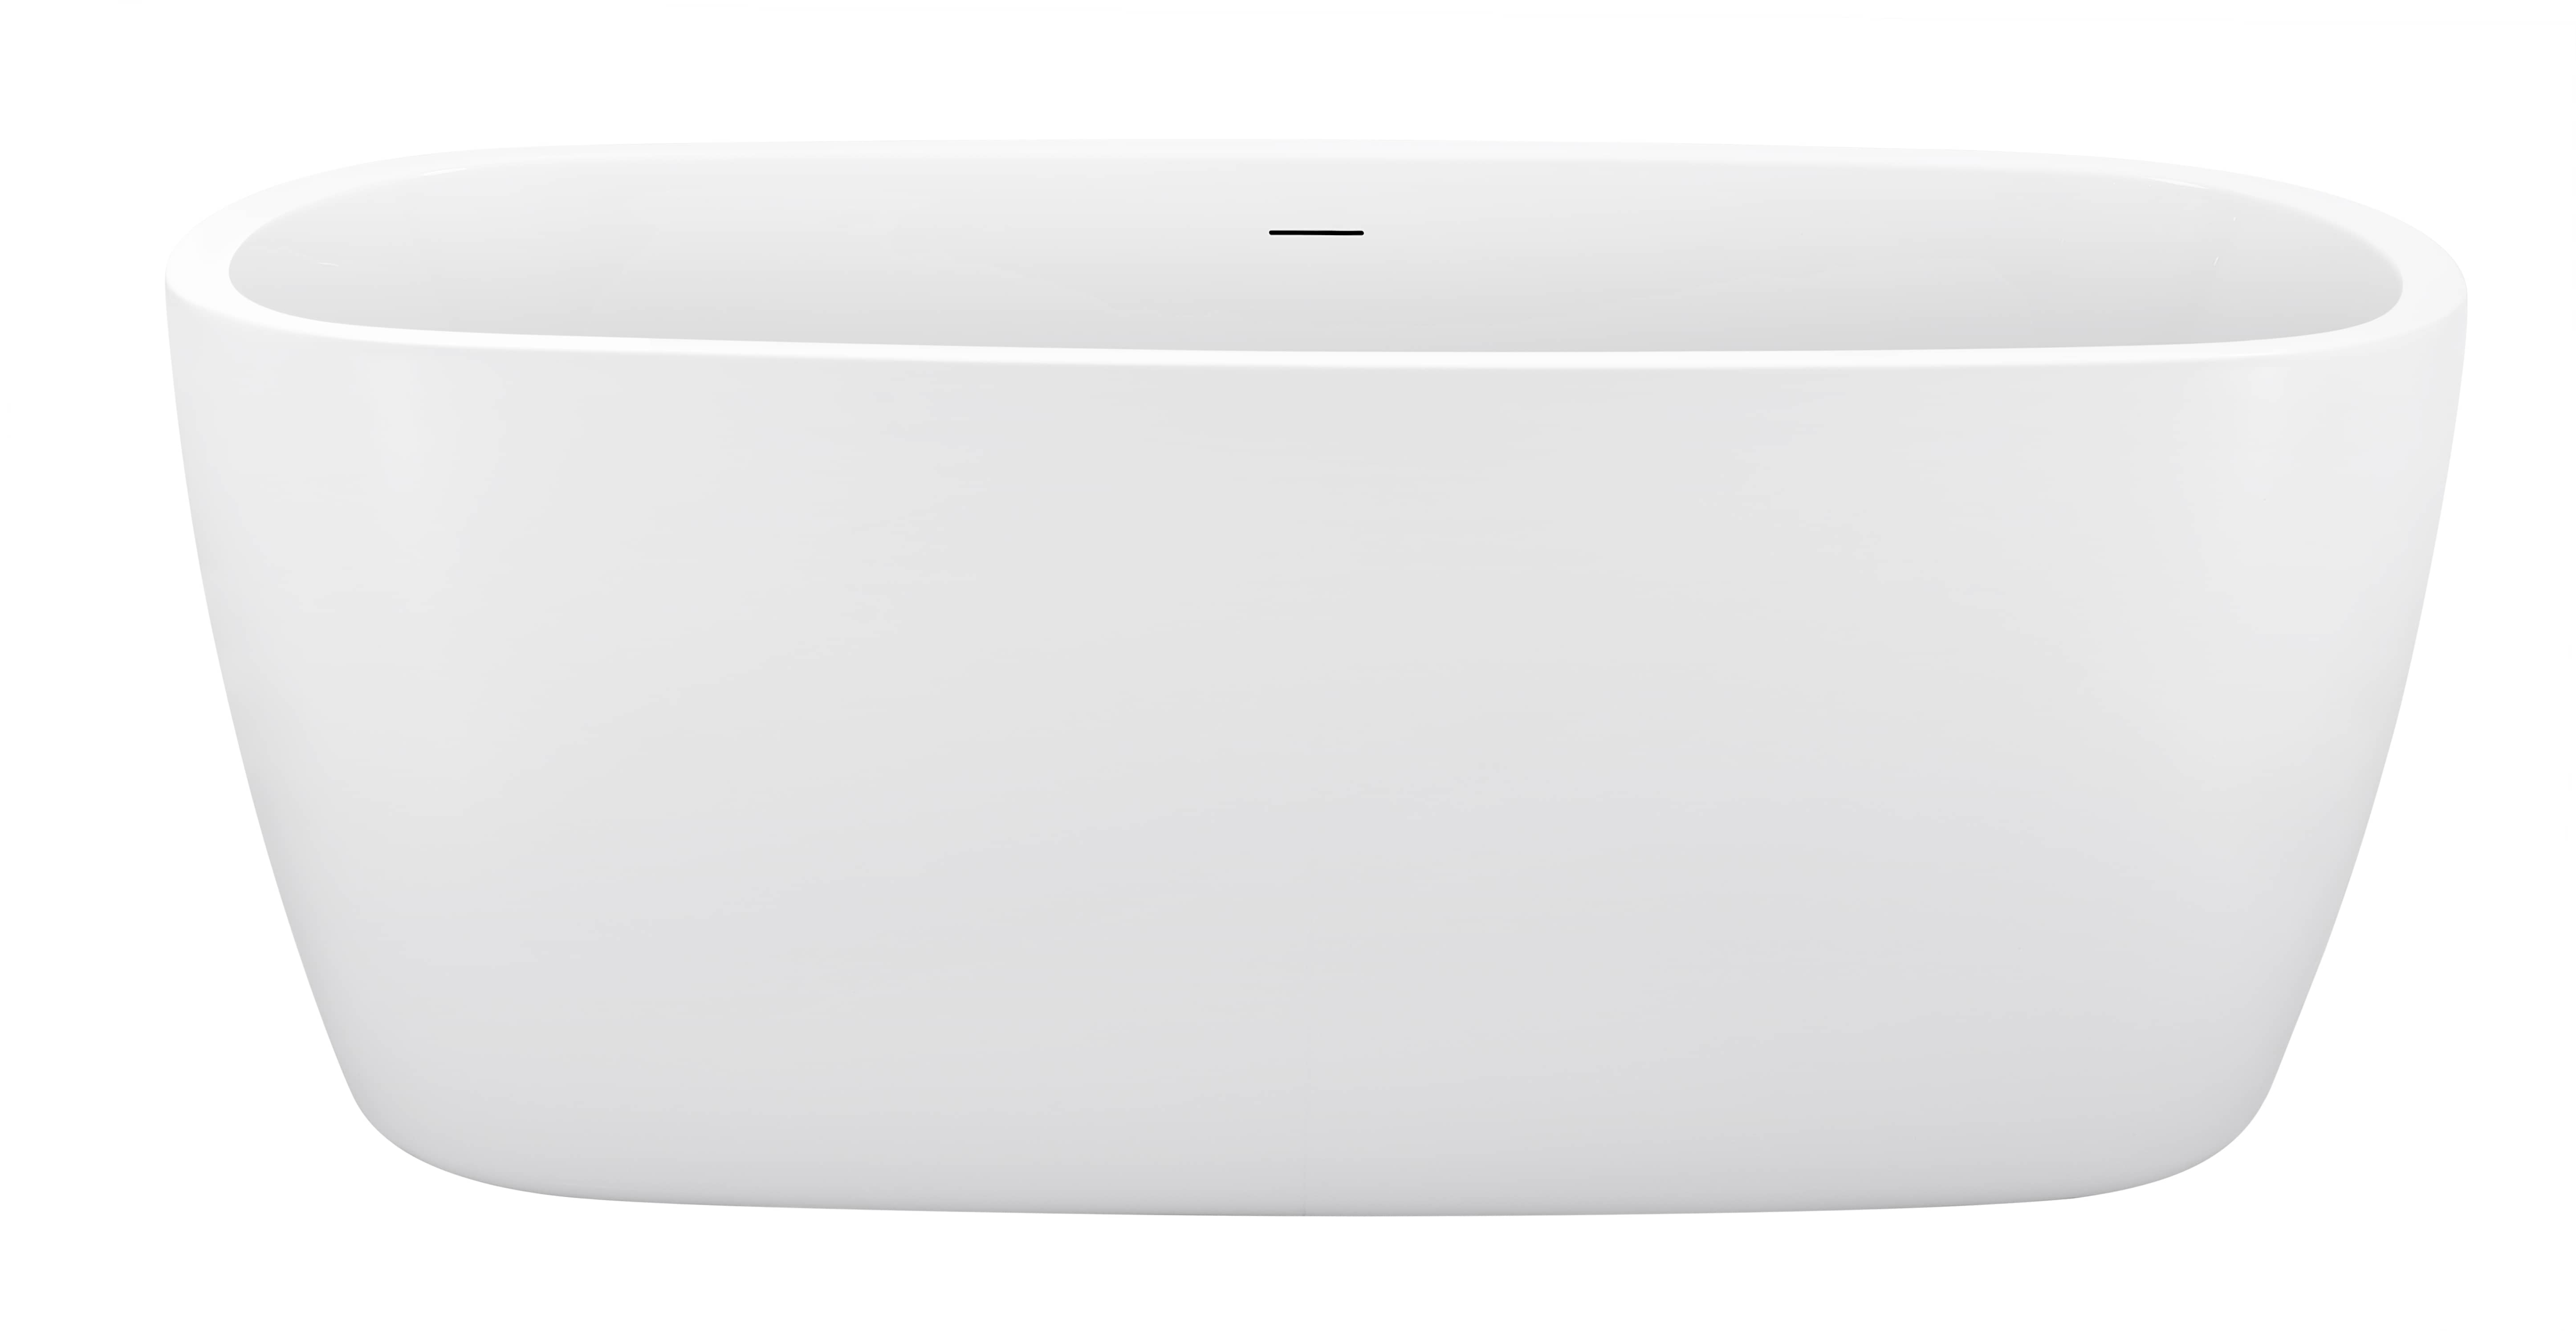 CASAINC 59" 100% Acrylic Contemporary Soaking Tub in White